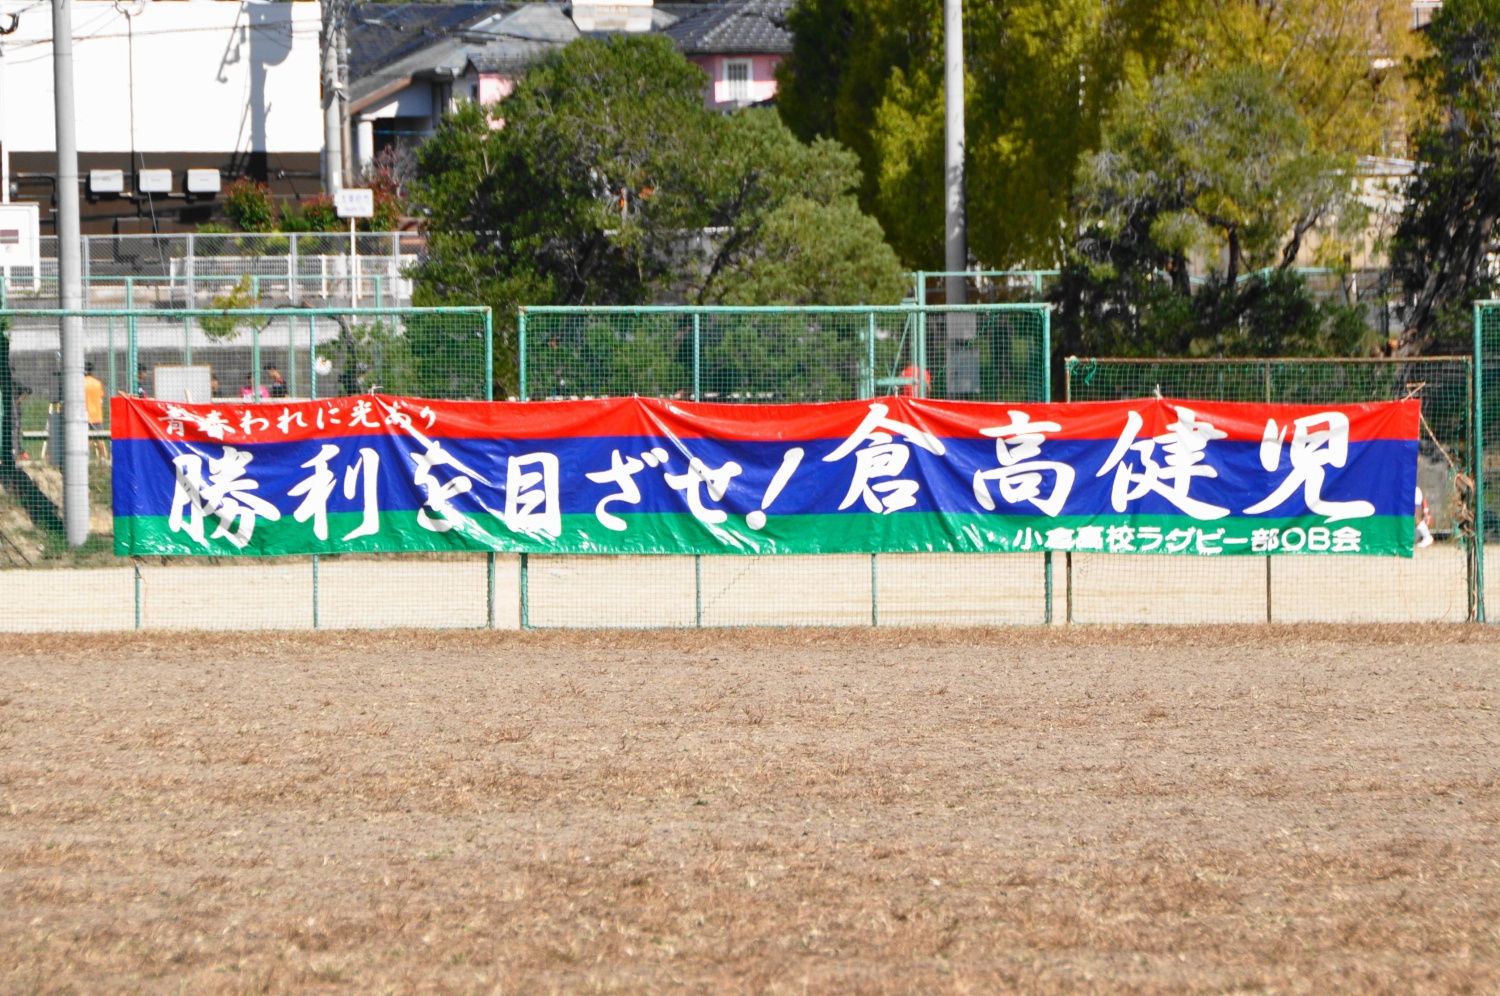 http://kokura-rugby.sakura.ne.jp/DSC_0033%20%281%29_xlarge.JPG